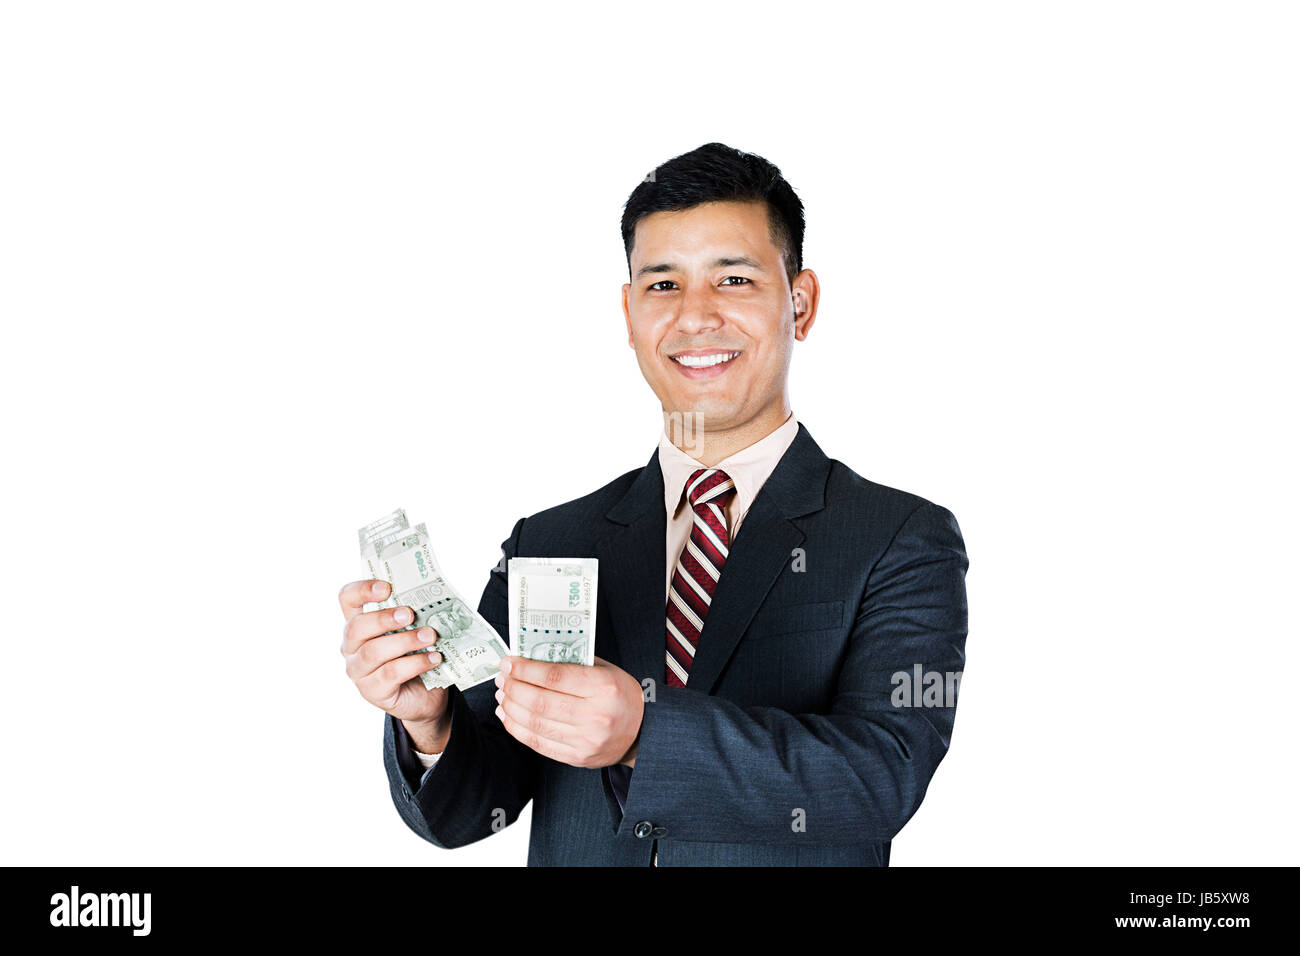 1 Business man Employee Counting Cash Rupees Deposit Money Saving Salary Stock Photo